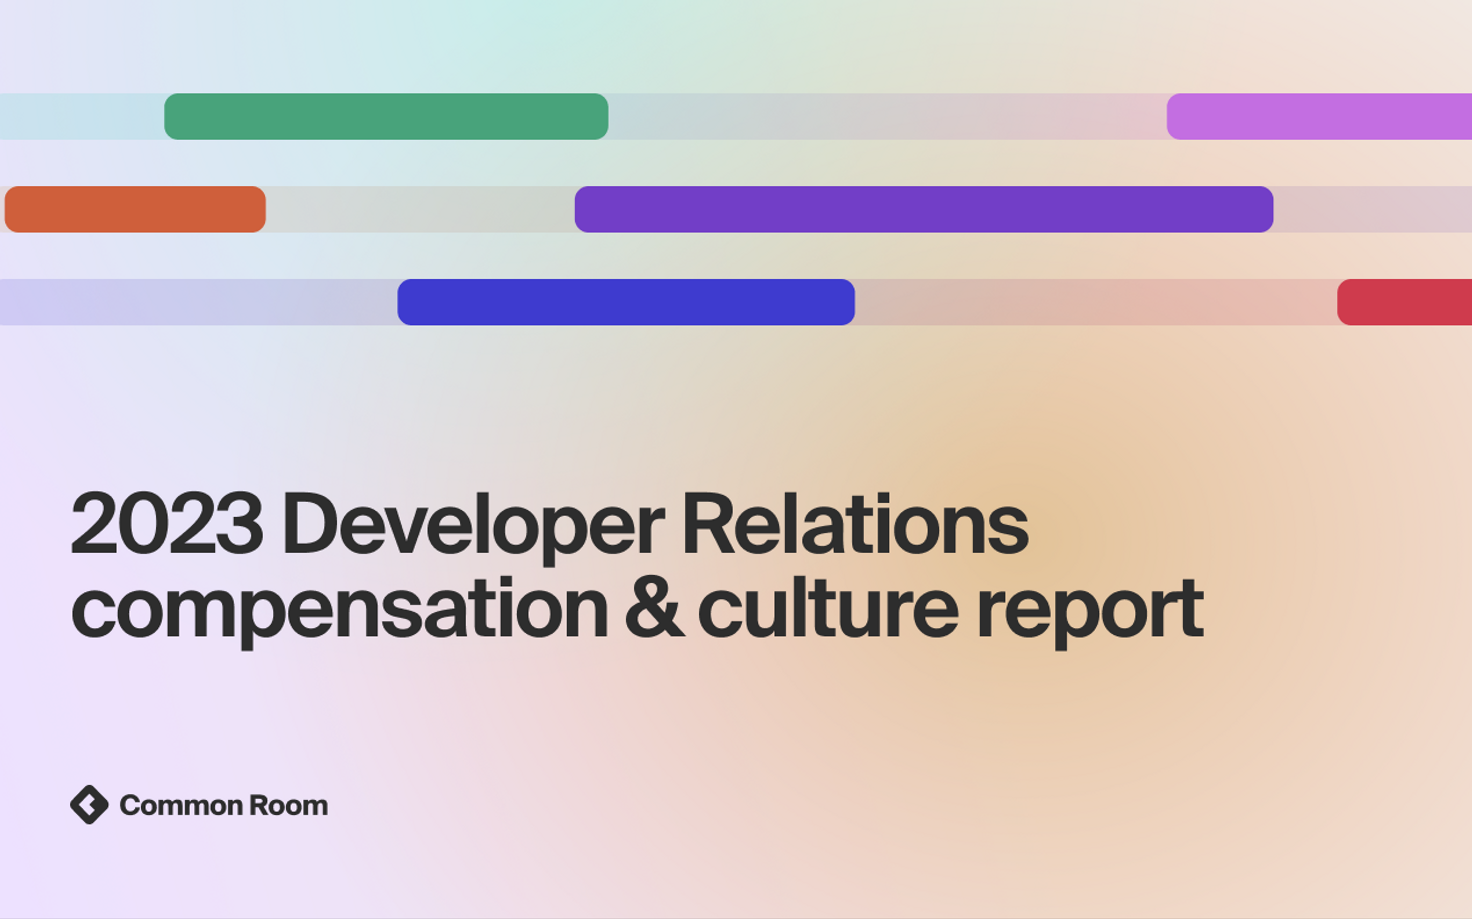 The 2023 Developer Relations compensation & culture report